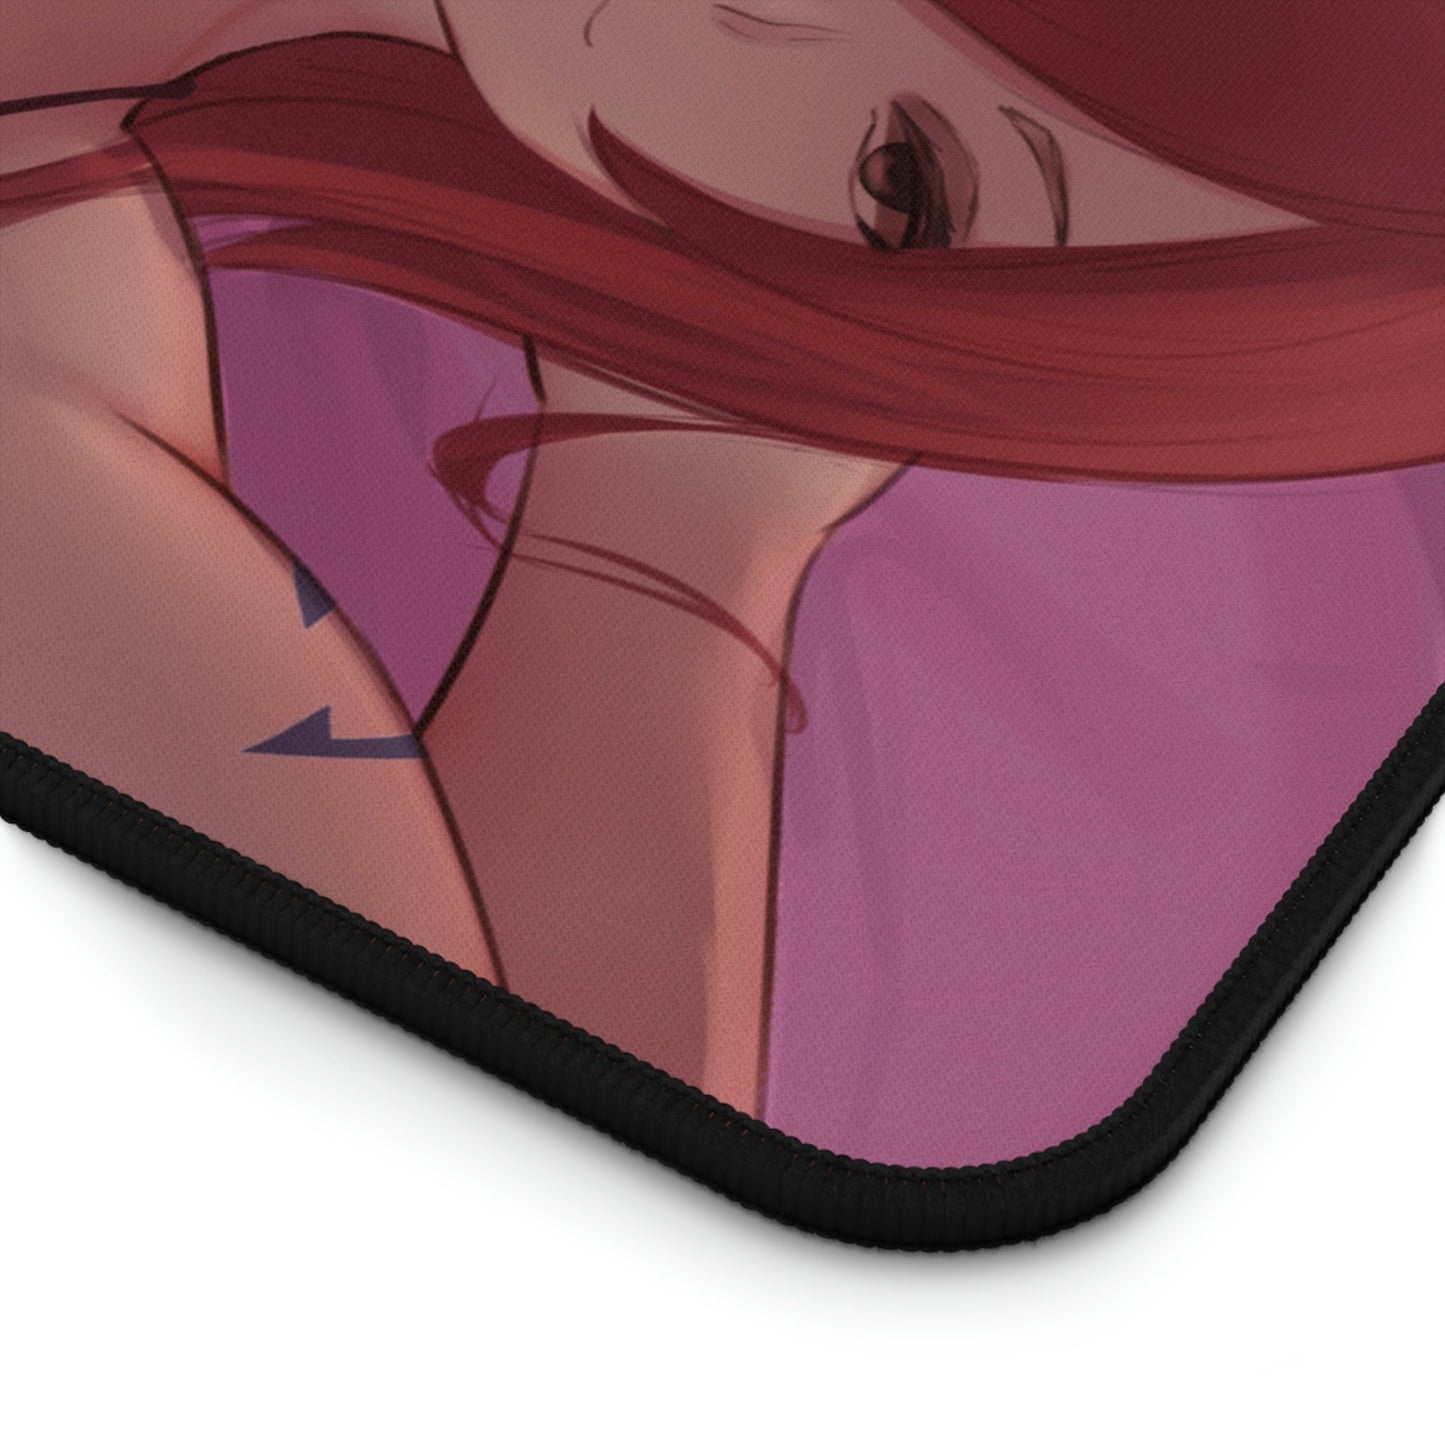 Fairy Tail Mousepad - Thick Erza Scarlet Bikini - Large Desk Mat - MTG Playmat